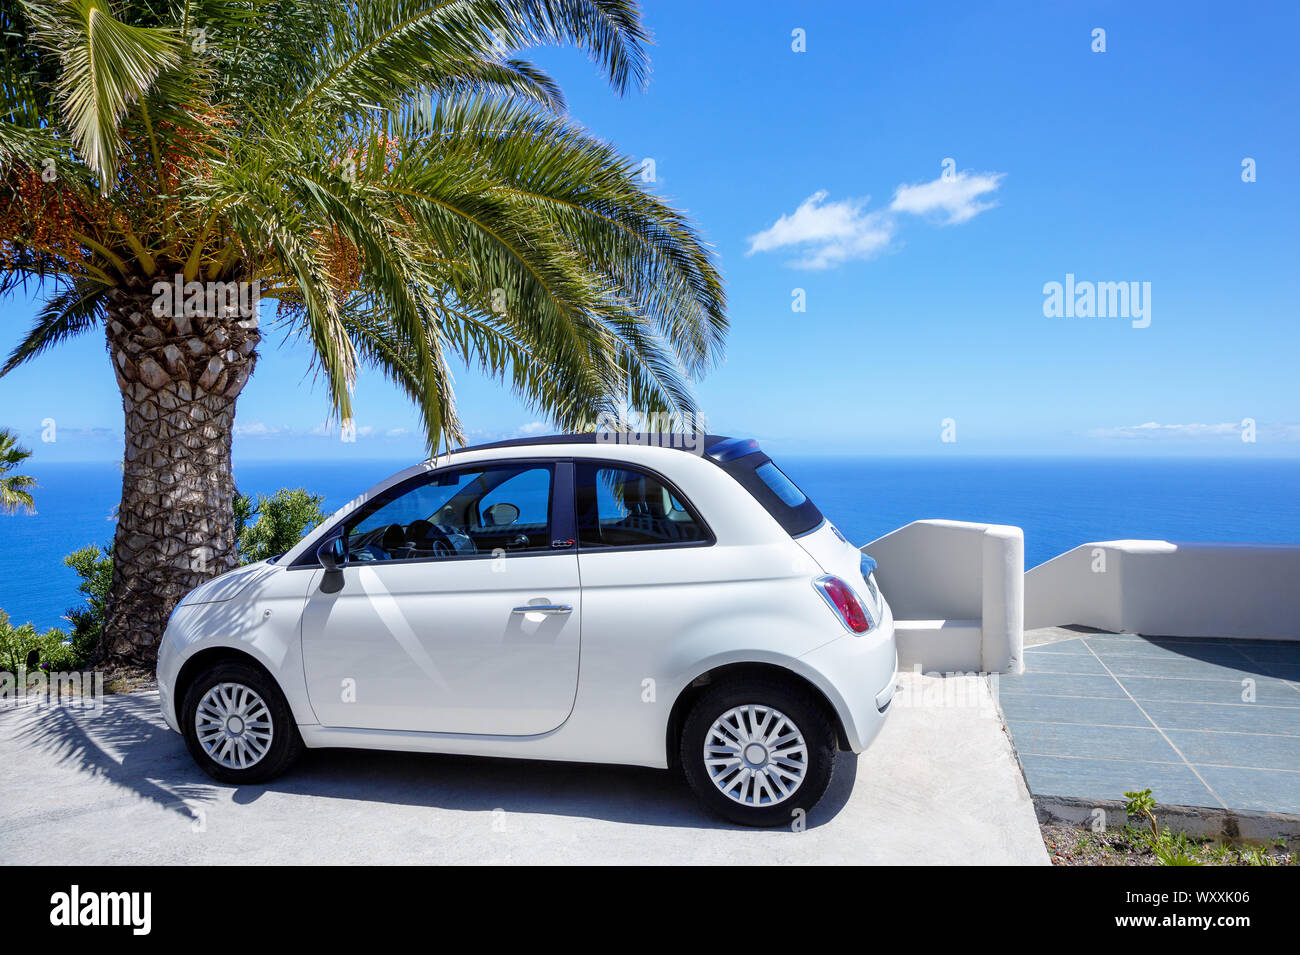 Fiat 500 parked on roadside, Island La Palma, Canary Islands, Spain, Europe. Stock Photo